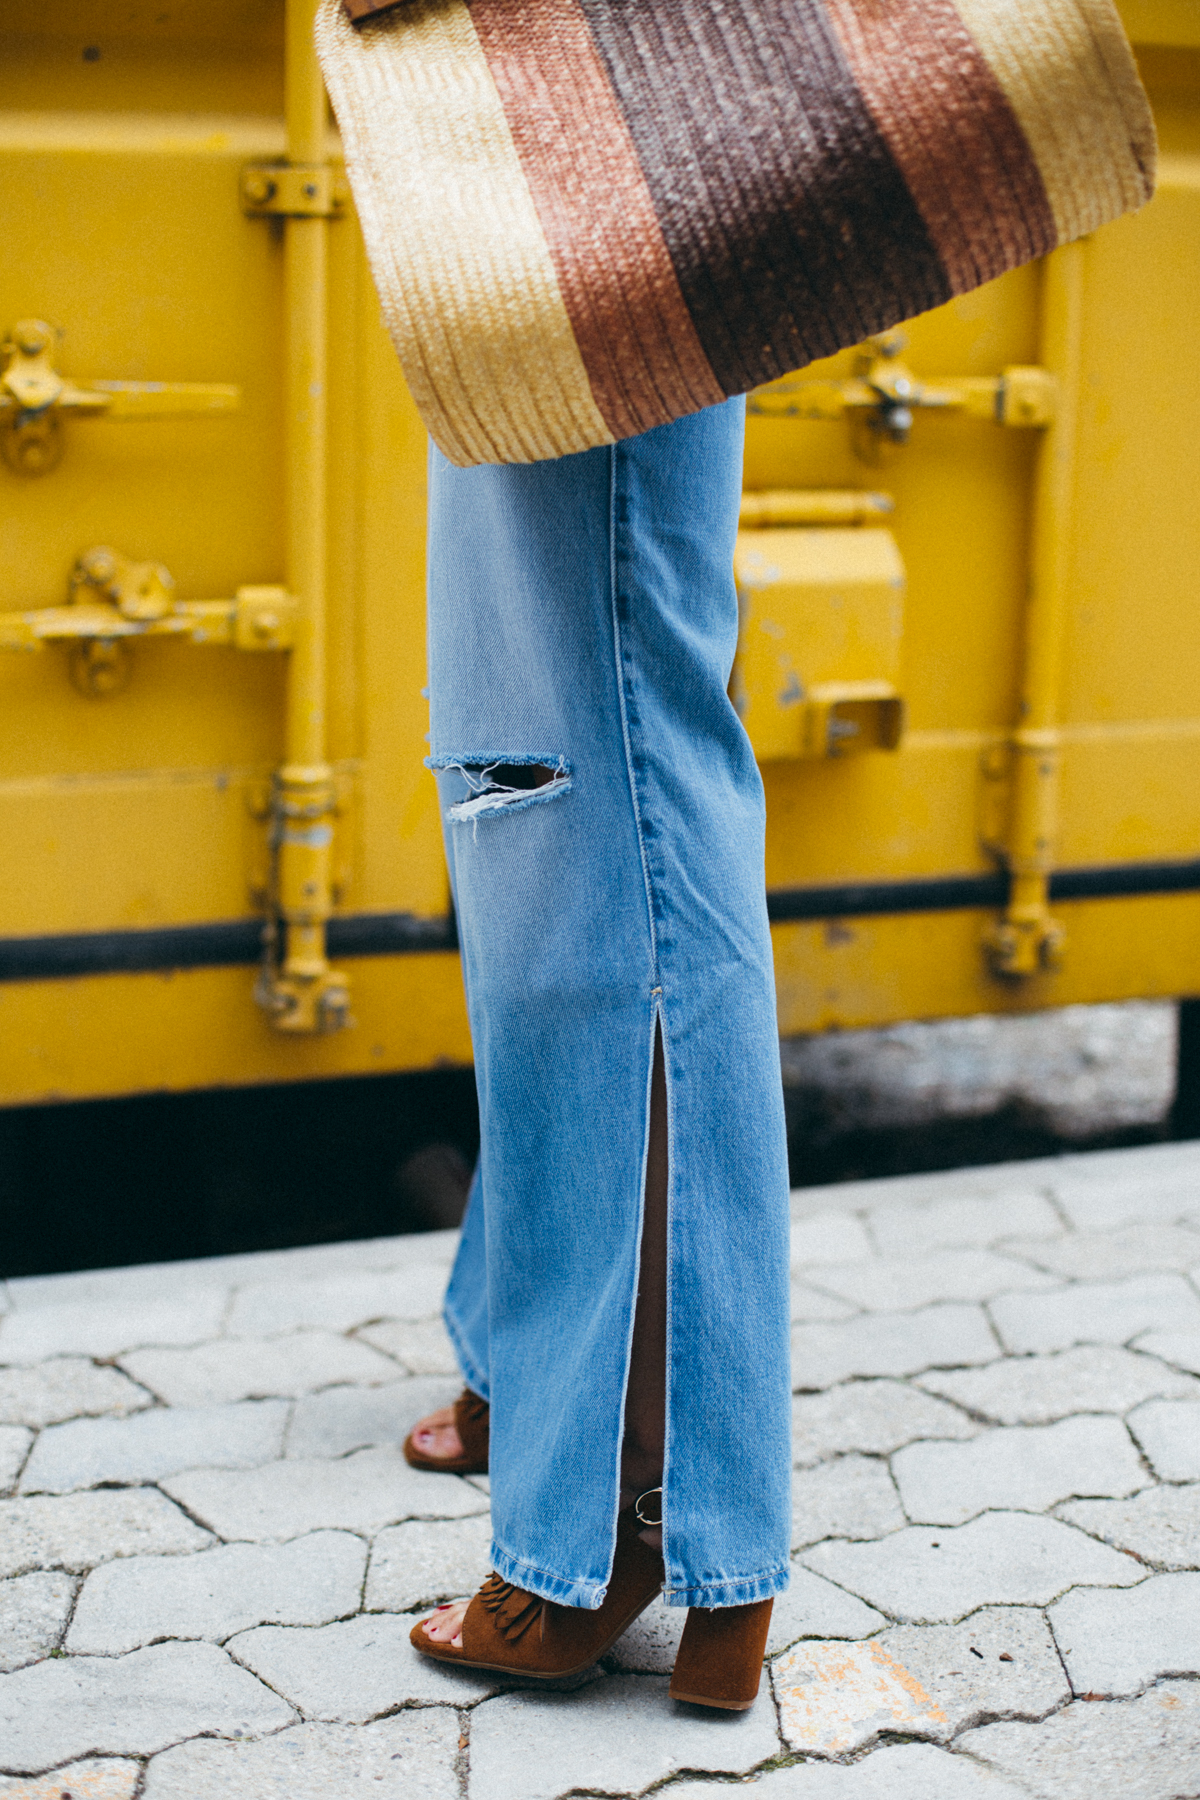 jeans kombinieren - streetstyle münchen - all denim - jeanslook - fransen sandalette - schlaghose - 90s trends - retro sunnies - fashionblog münchen